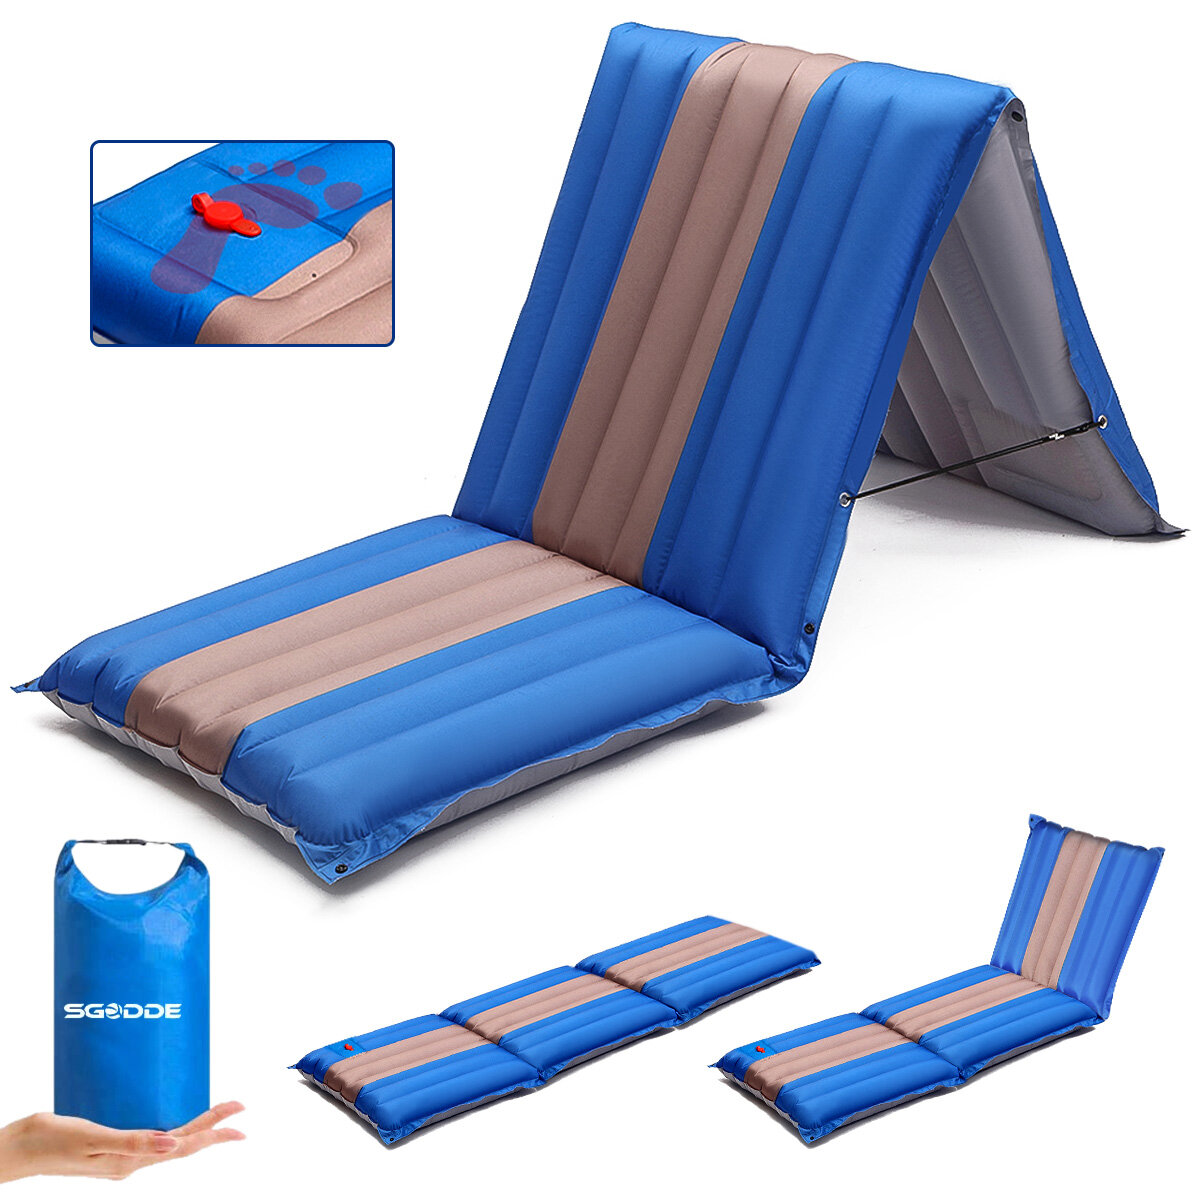 SGODDE Single Sleeping Pad Waterproof Lightweight Folding Nap Mat for Car Emergency Supplies Camping Travel